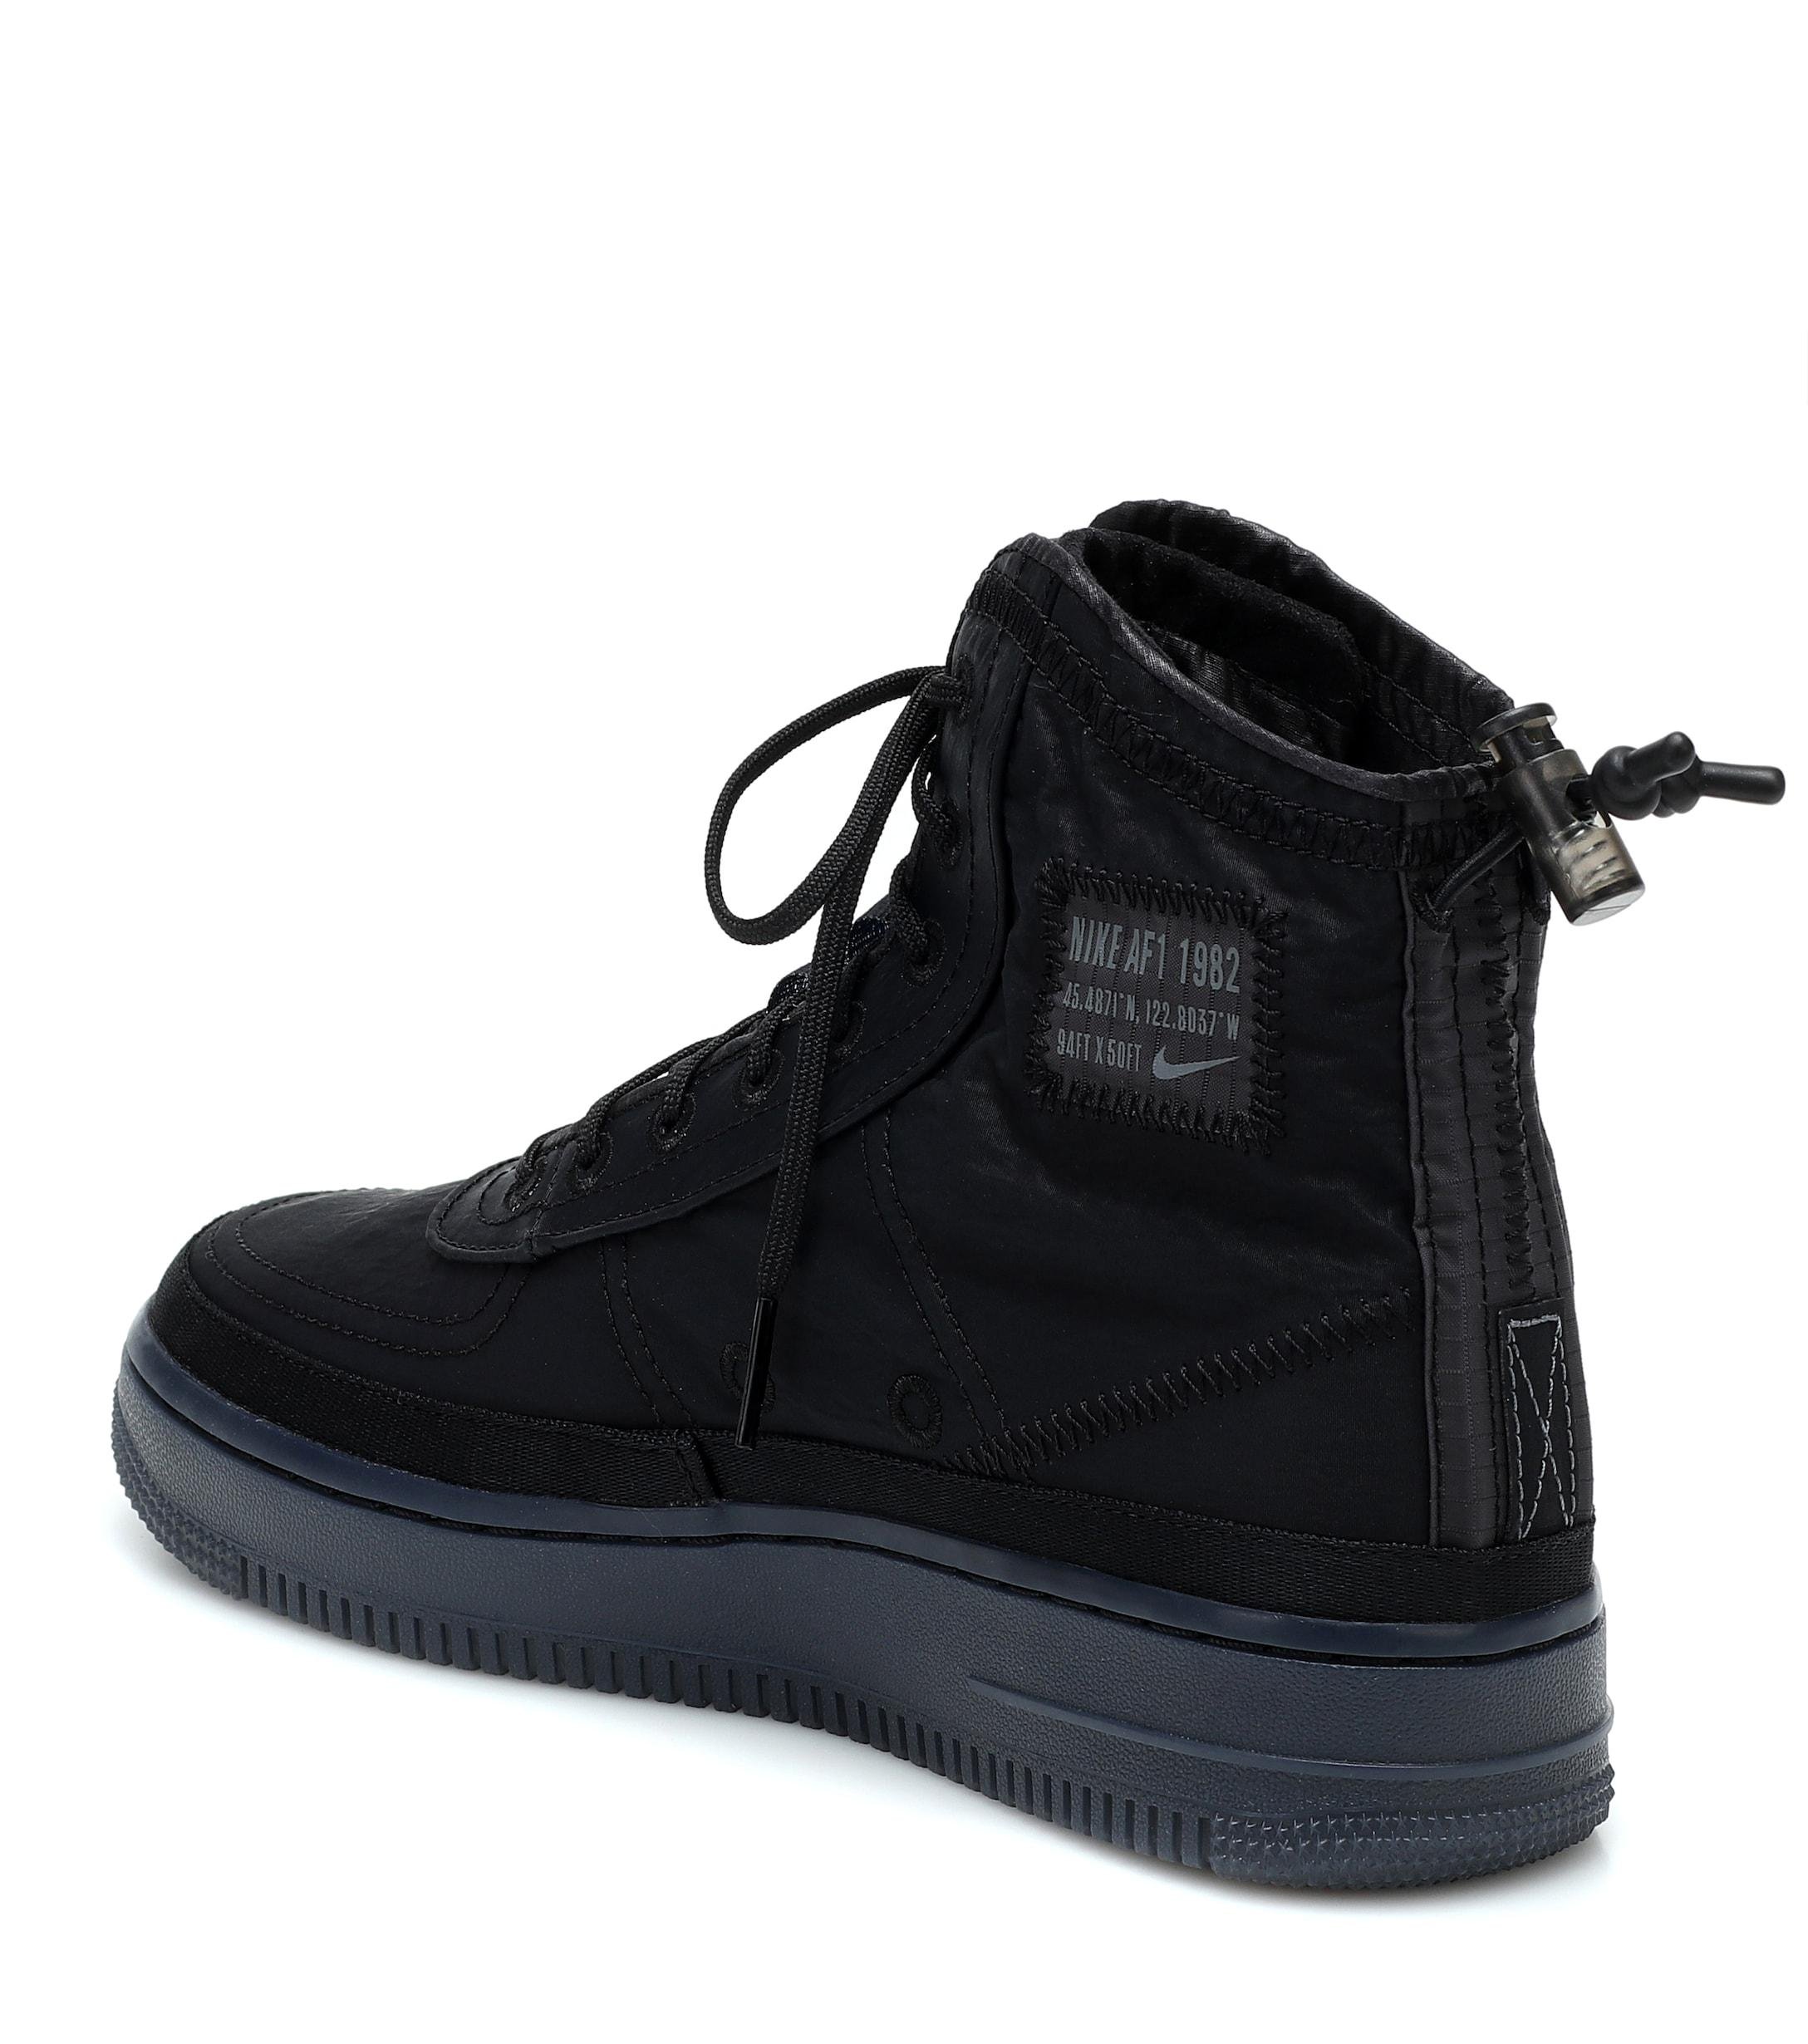 Nike Air Force 1 Shell Shoe in Black